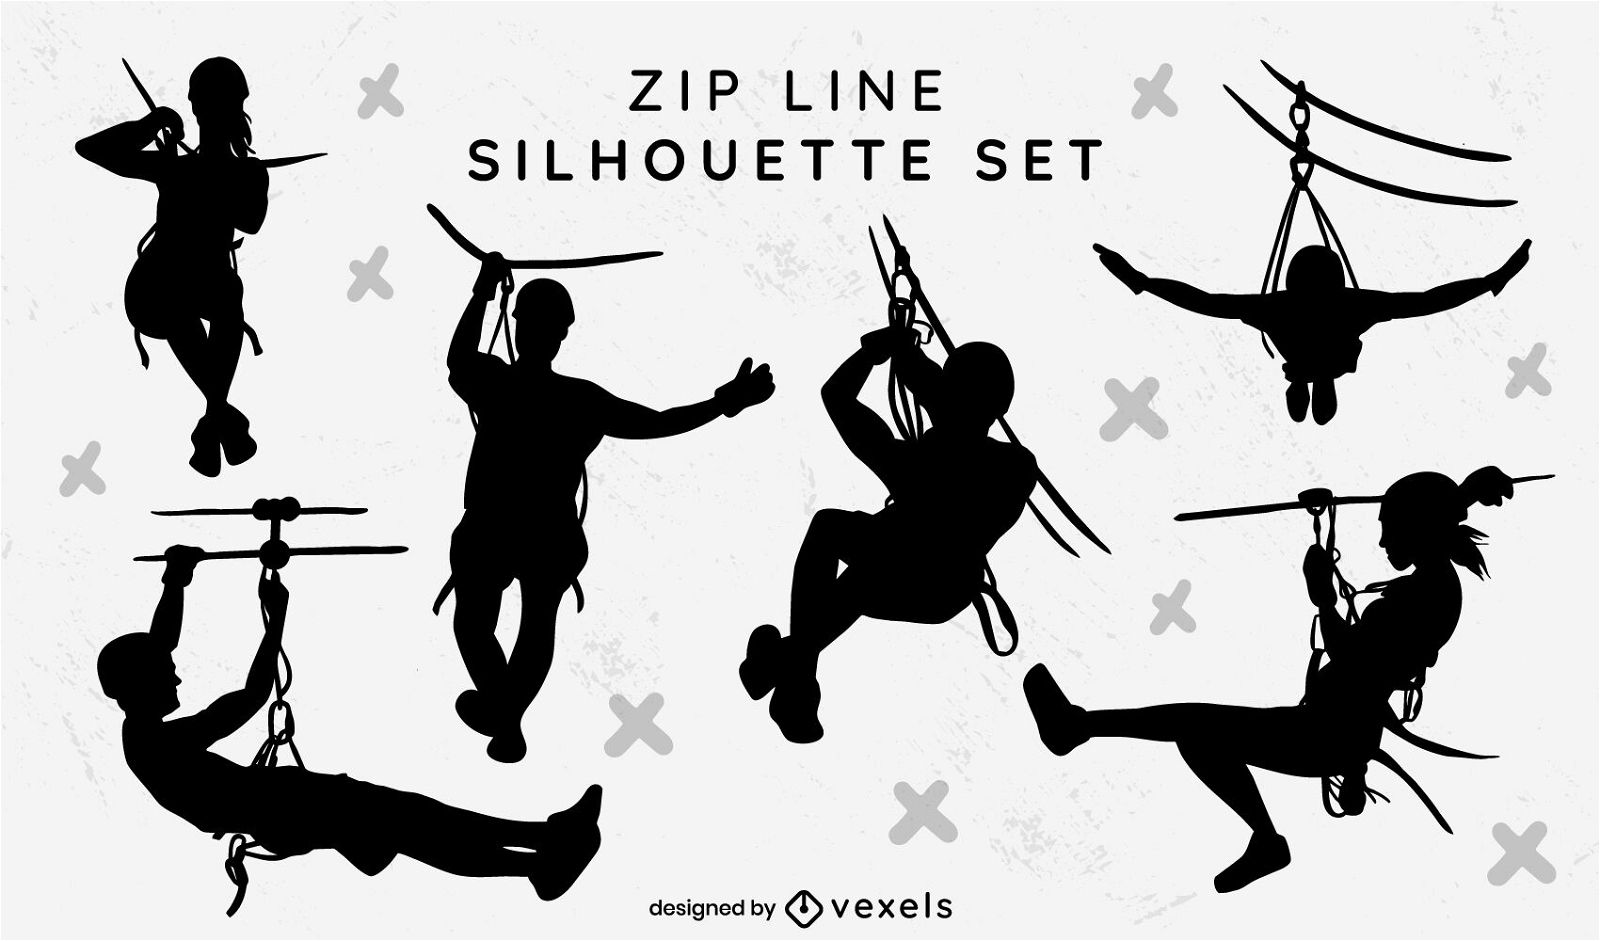 Zip line silhouette set